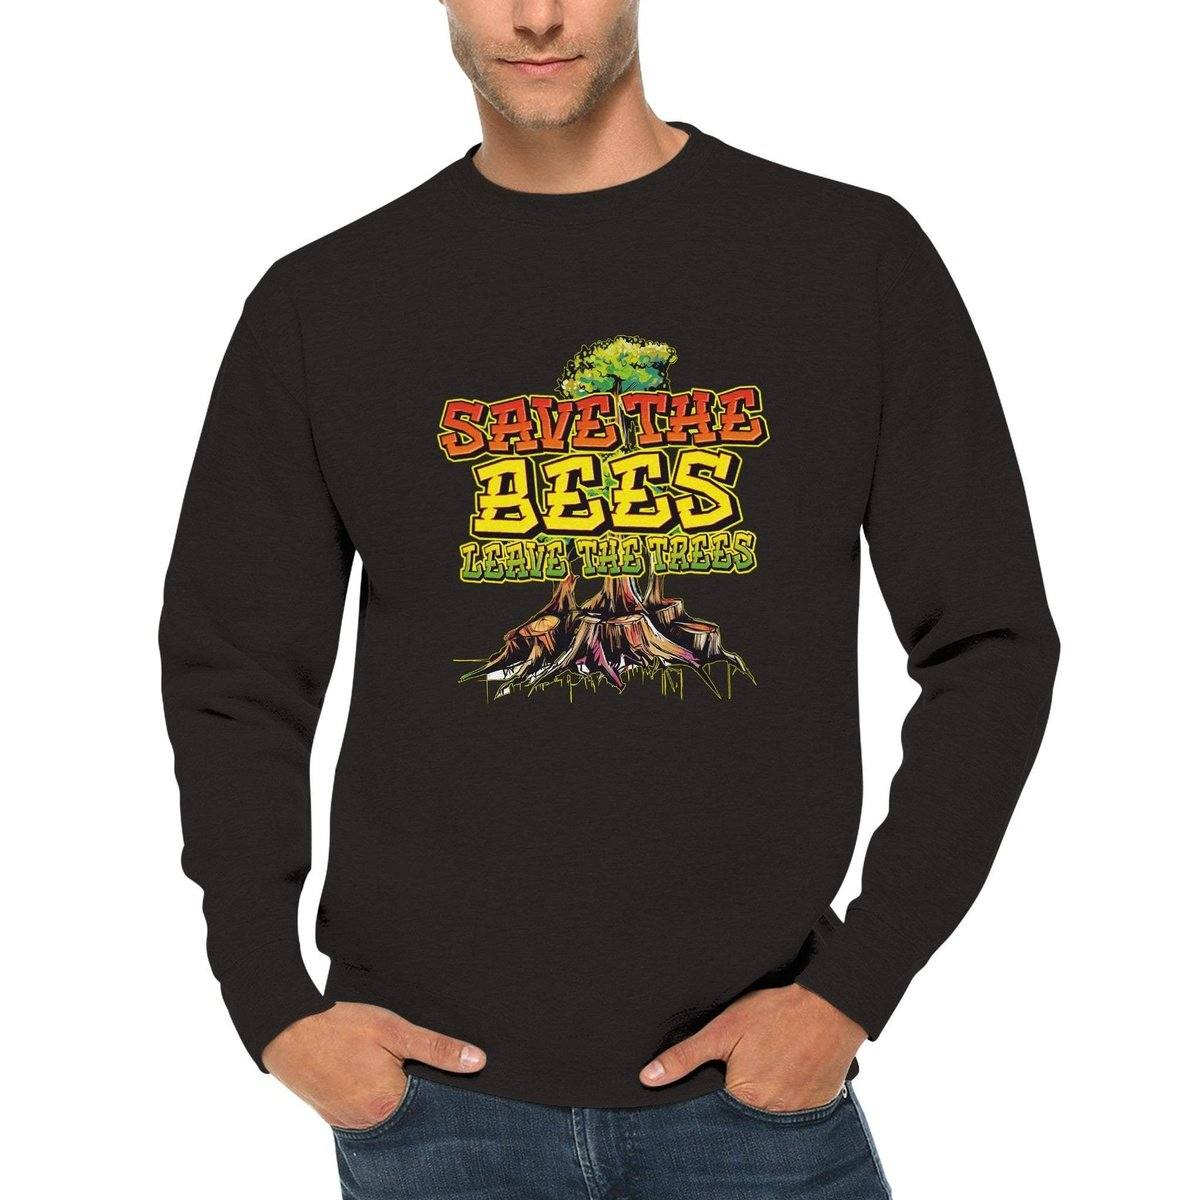 Save The Bees Jumper - Leave The Trees - Stumps - Premium Unisex Crewneck Sweatshirt Australia Online Color Black / S